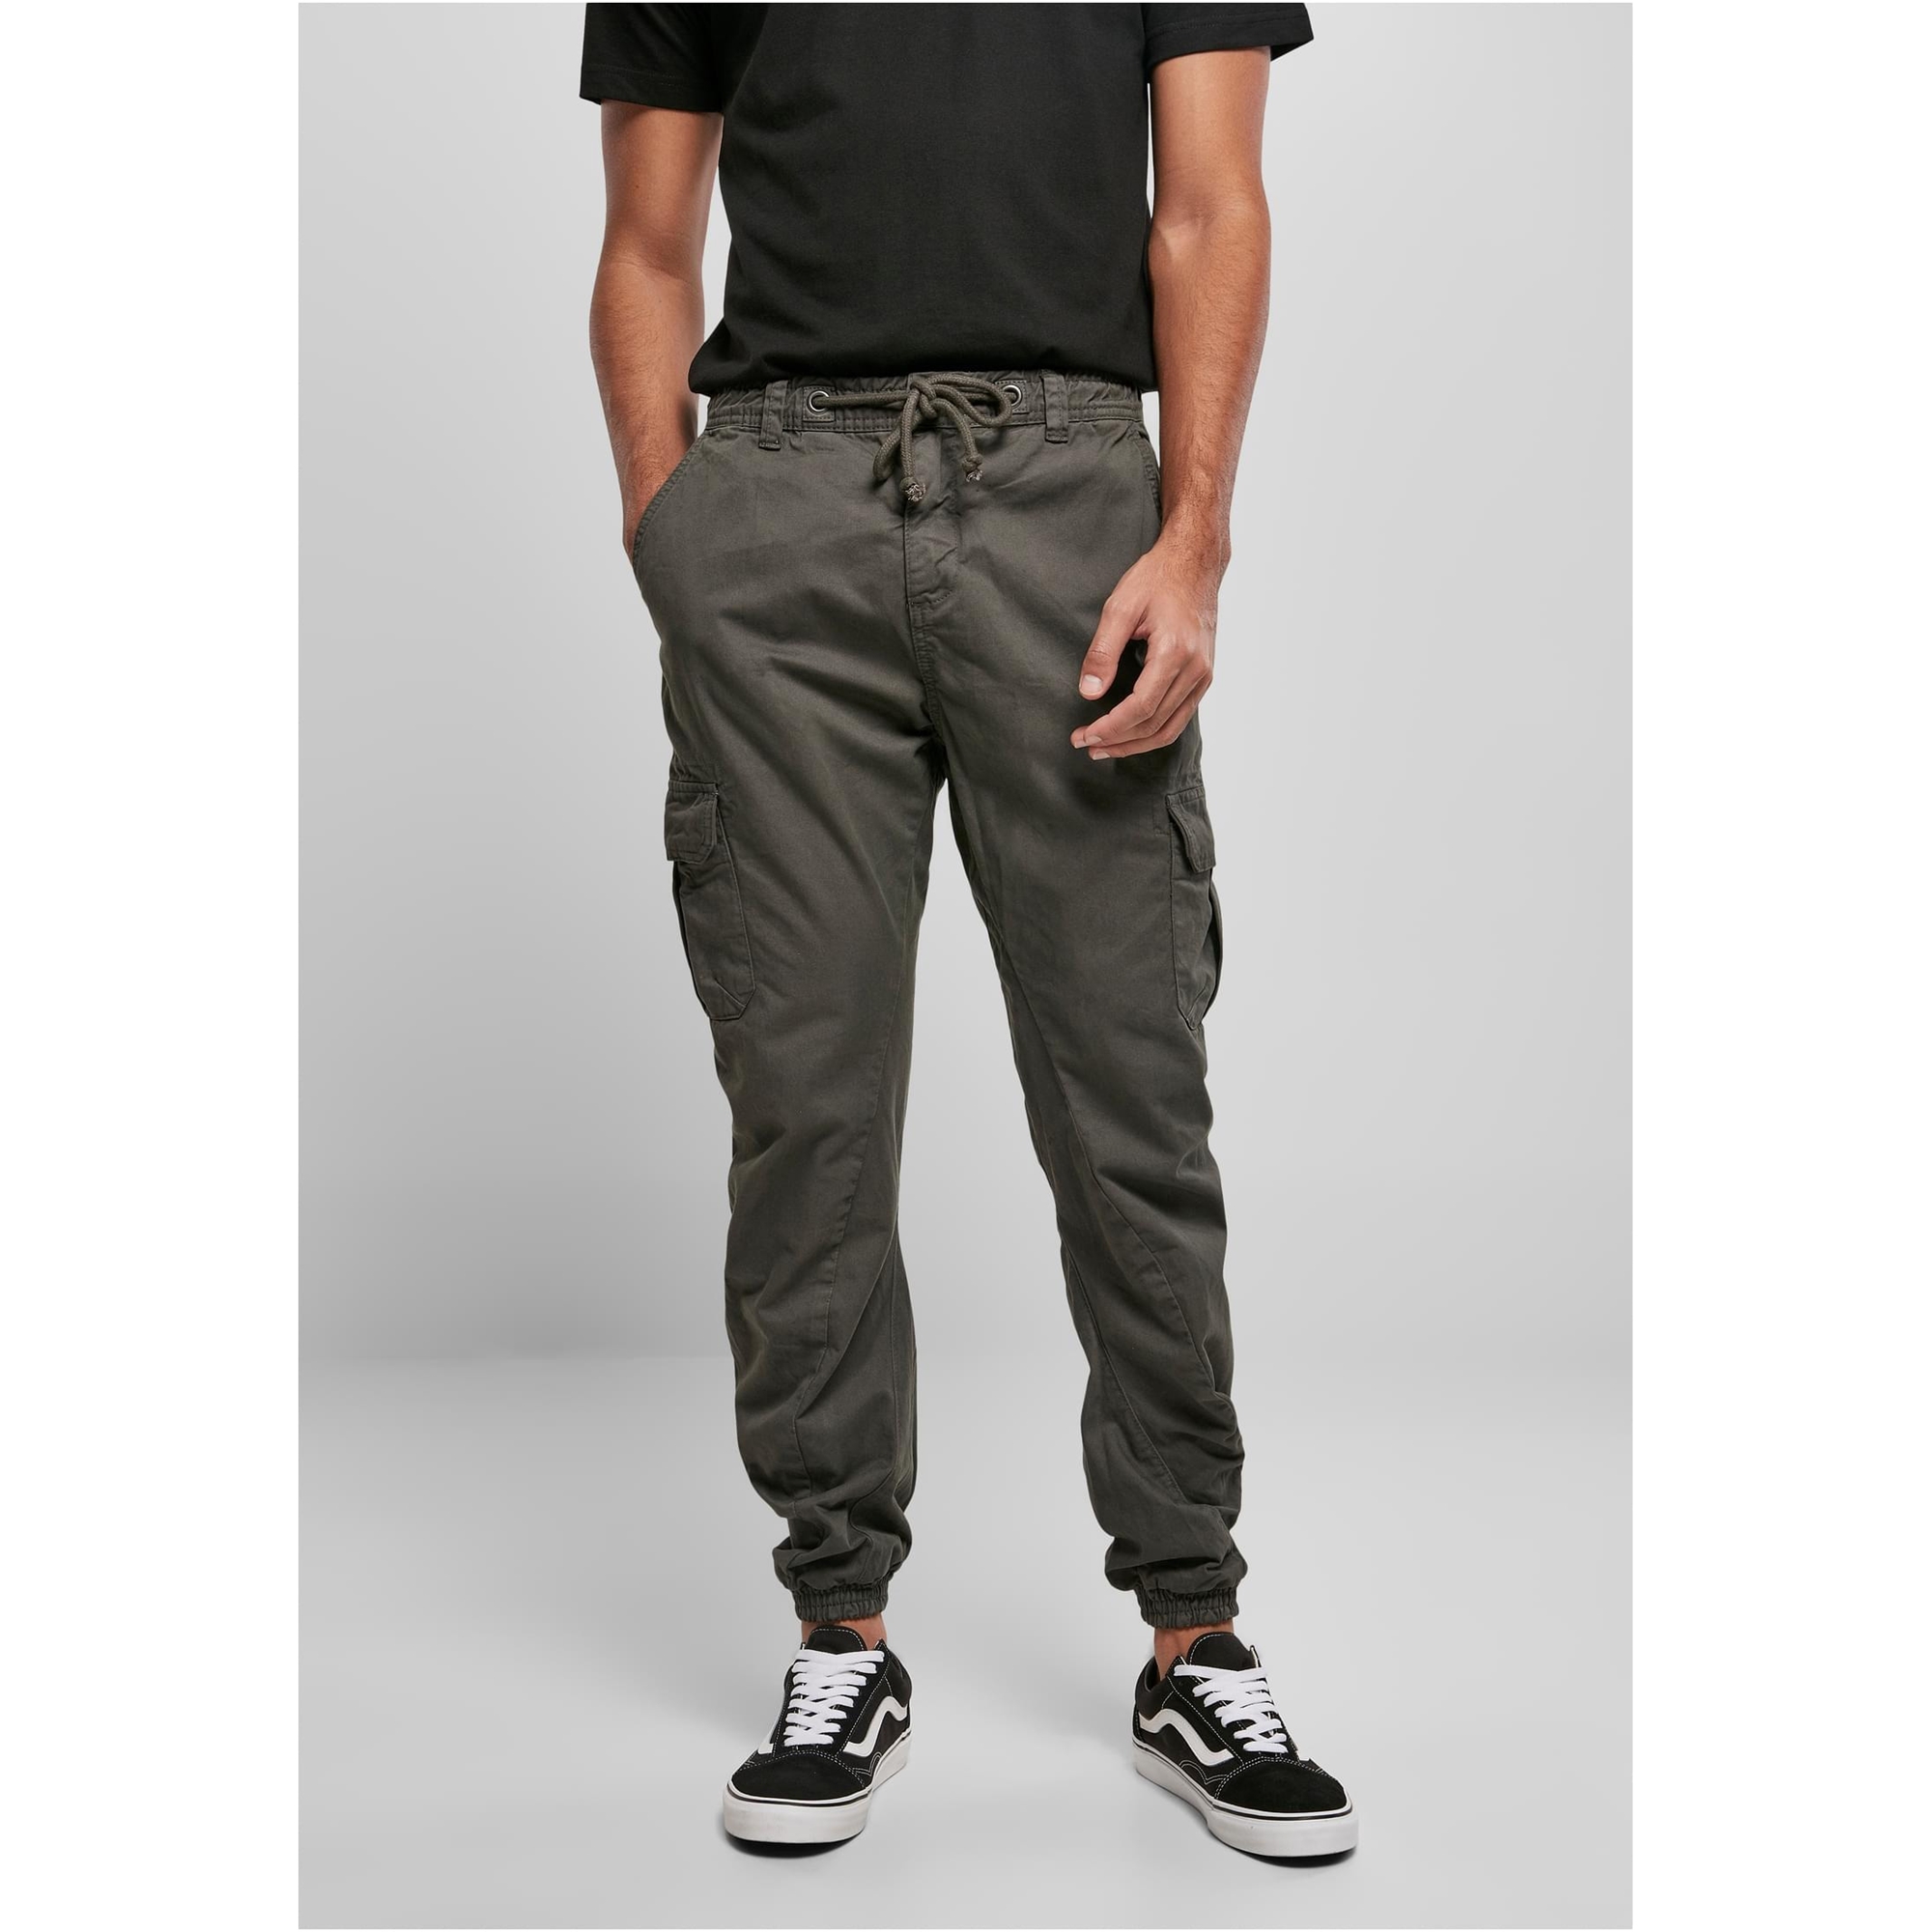 Urban Classics Herren Cargo Hose Cargohose Jeans Sweatpant Chino  Jogginghose | eBay